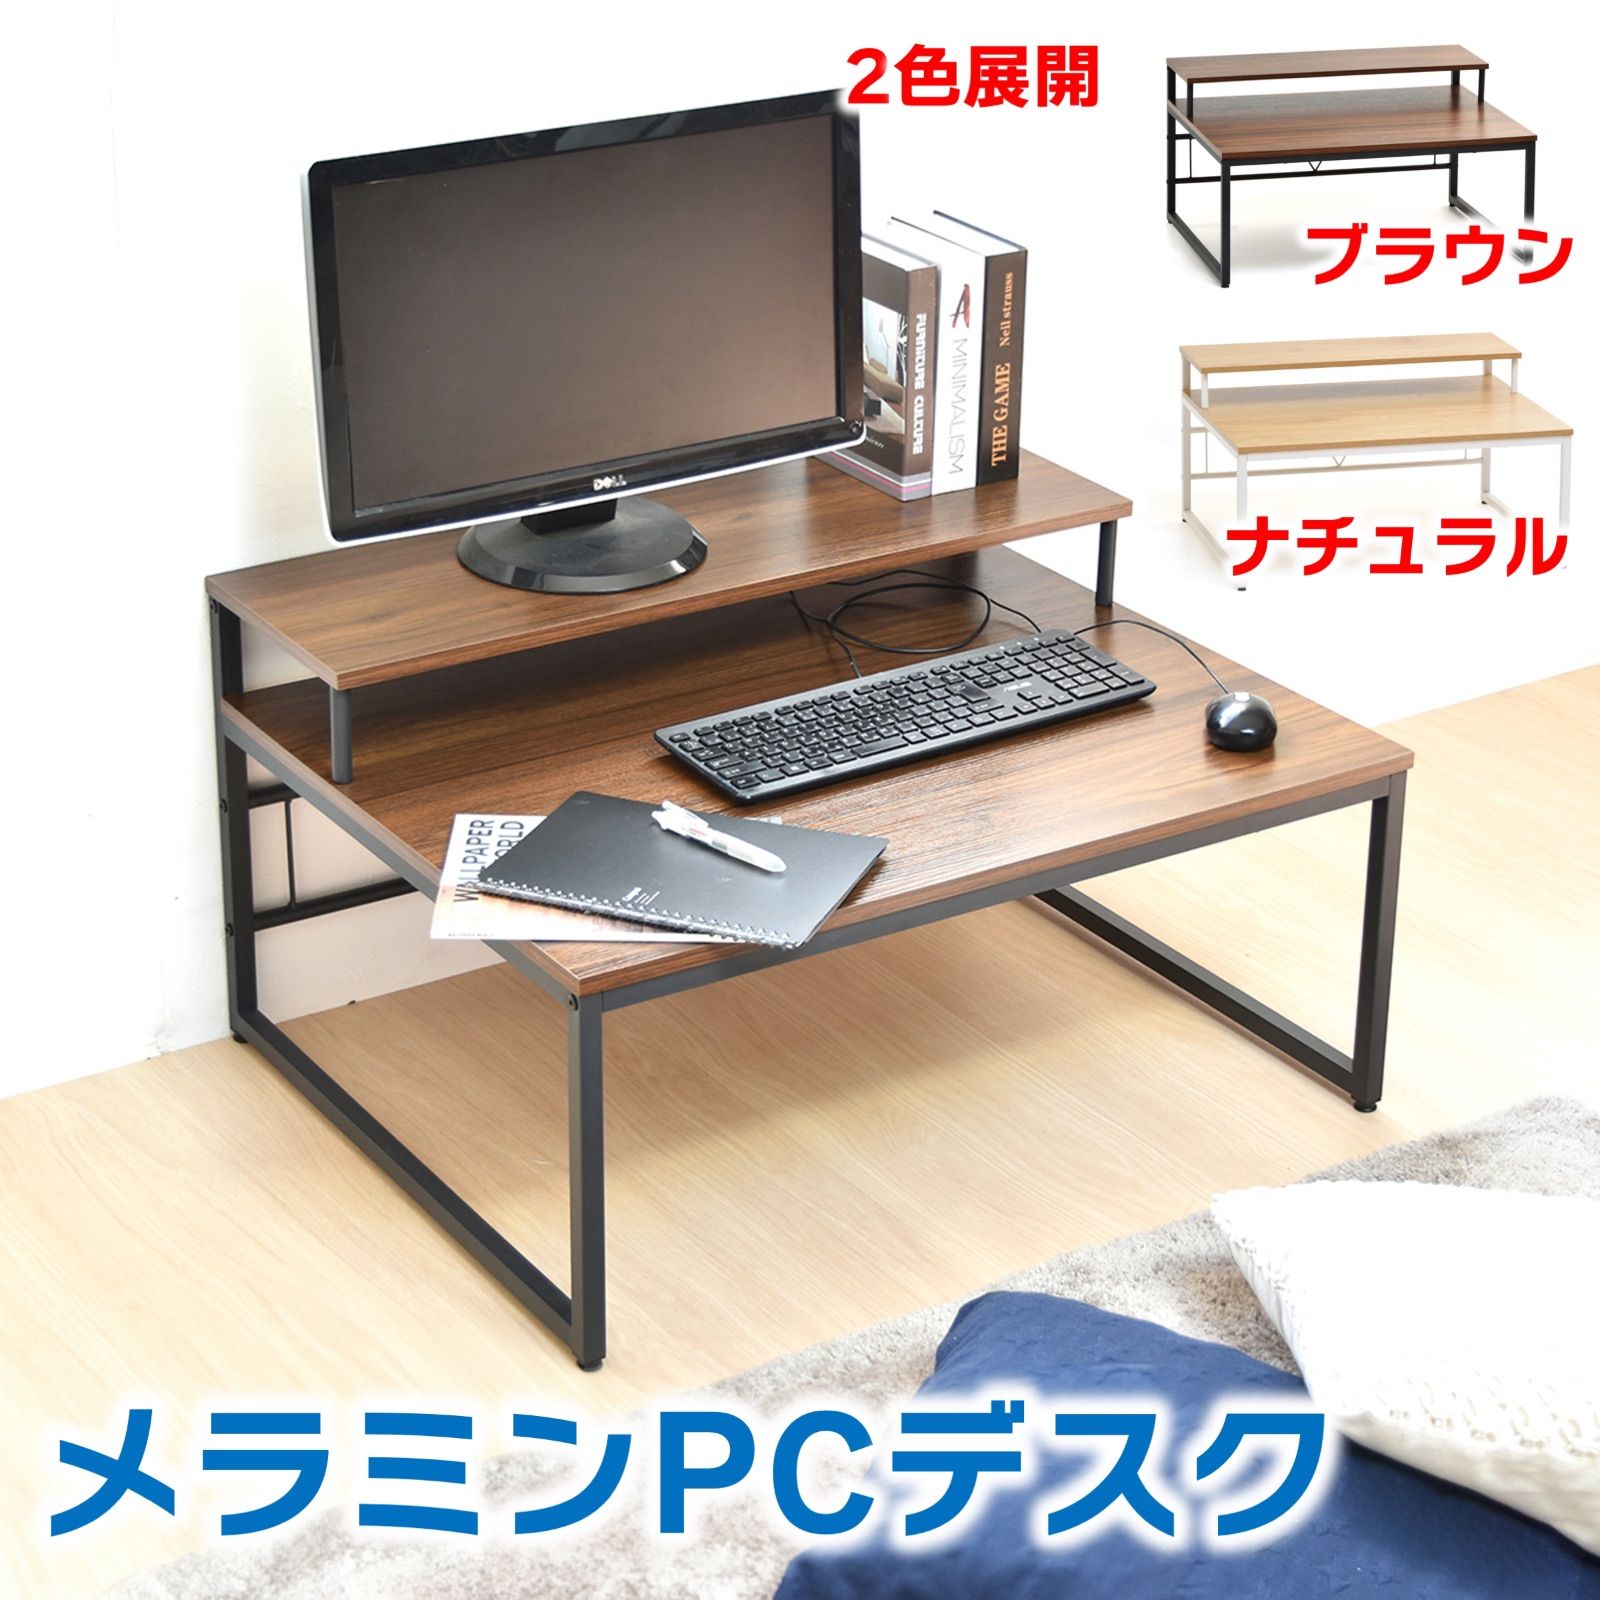 Fournir Furniture】座卓 省スペース PCデスク ローデスク パソコン